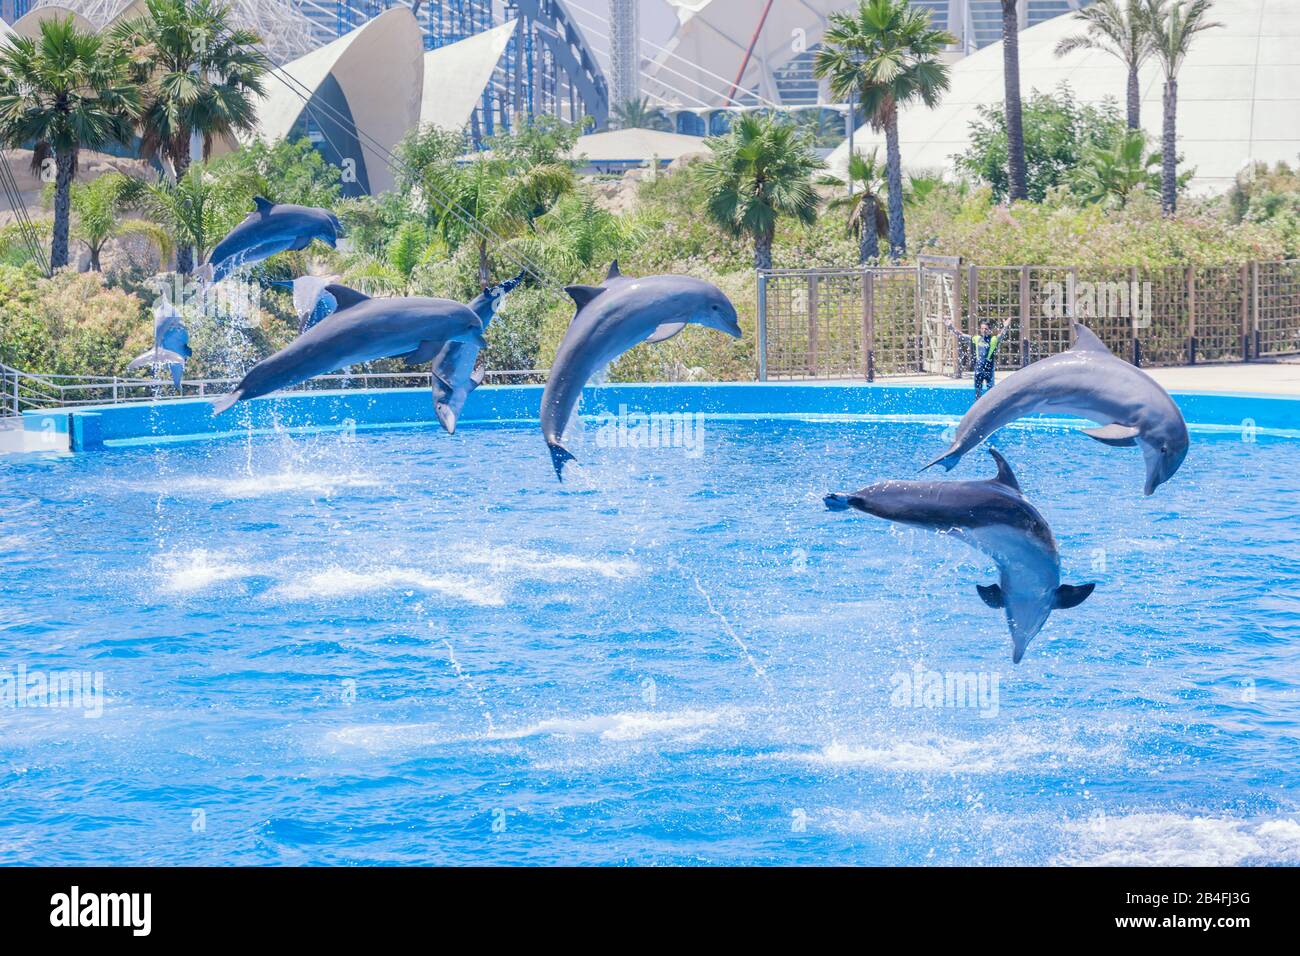 Dolphins show, Oceanographic, City of Arts and Sciences, Valencia, Comunidad Autonoma de Valencia, Spain Stock Photo